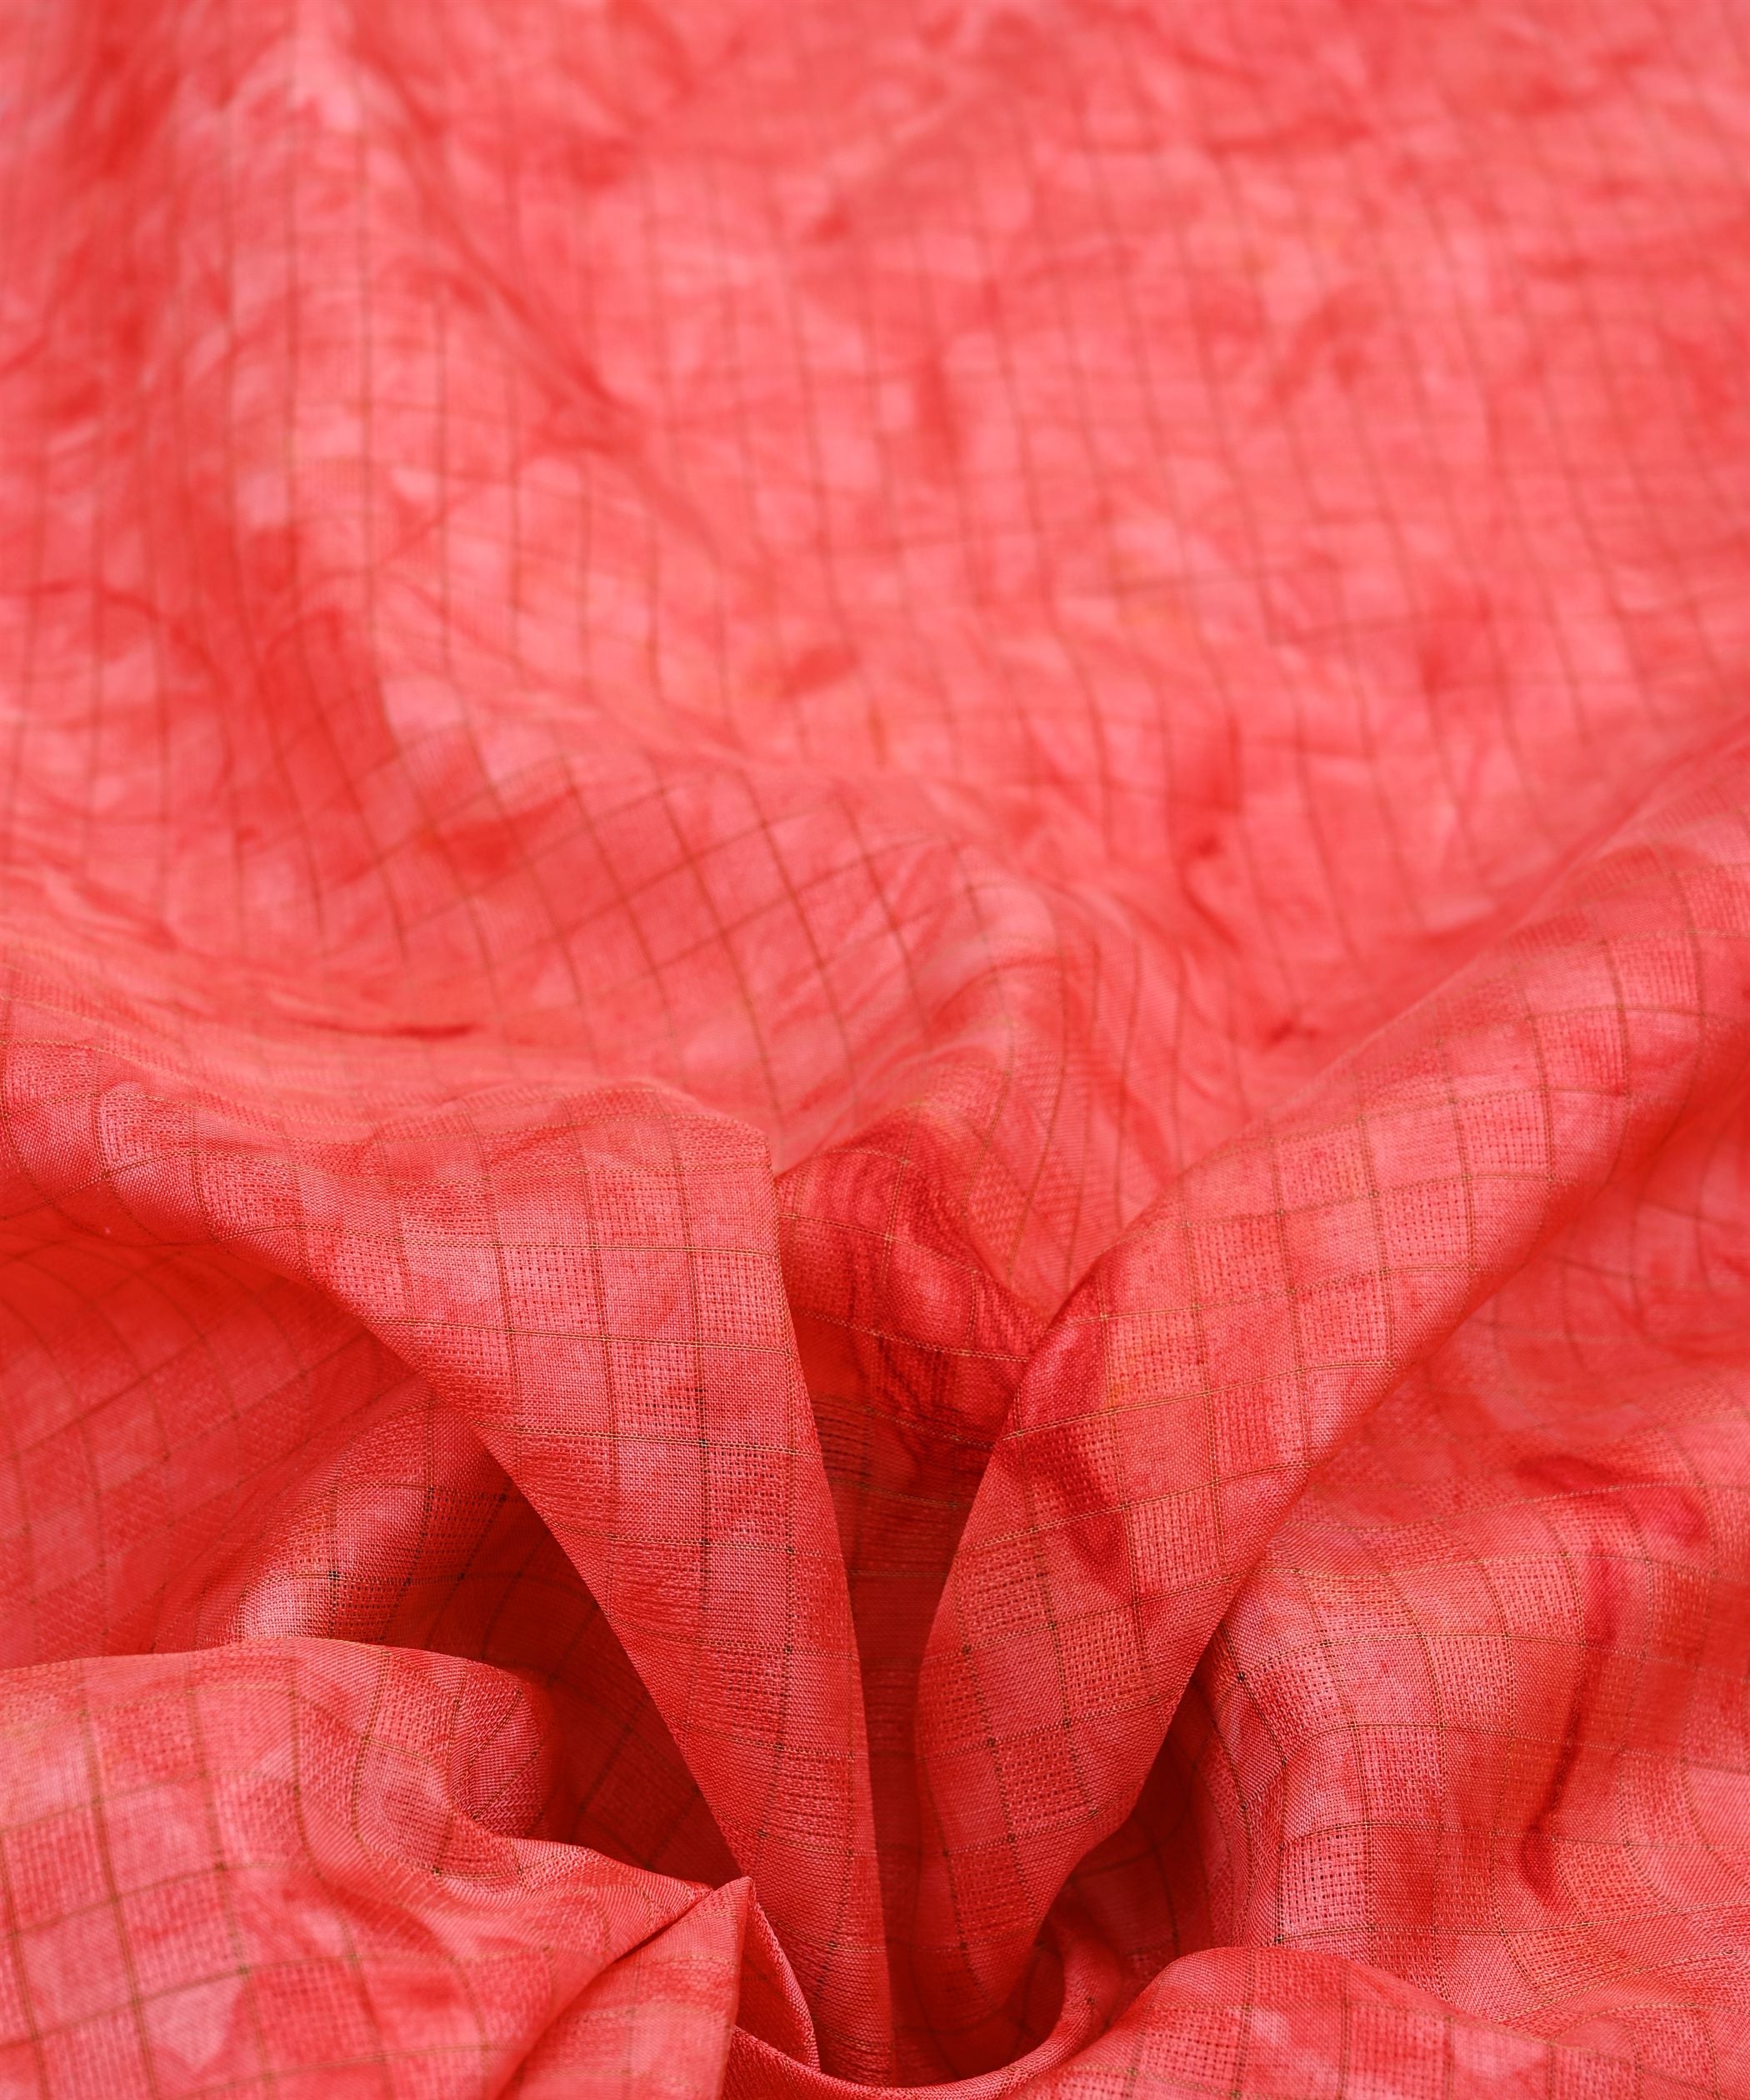 Reddish Pink Jute Fabric with Checks and Shibori Print